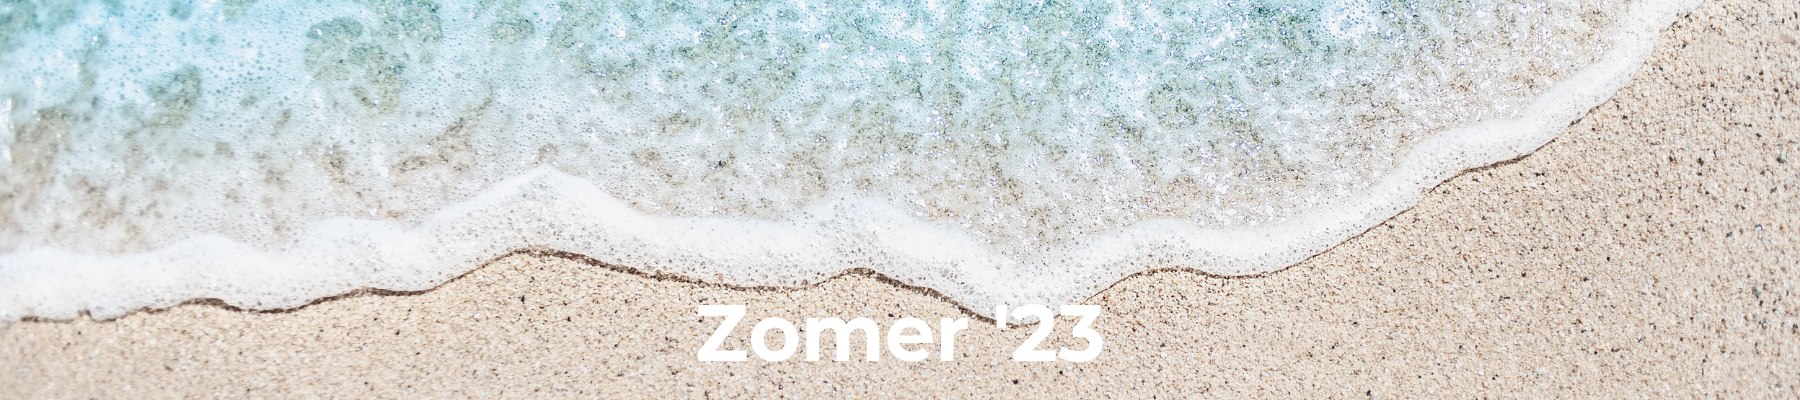 Zomer '23